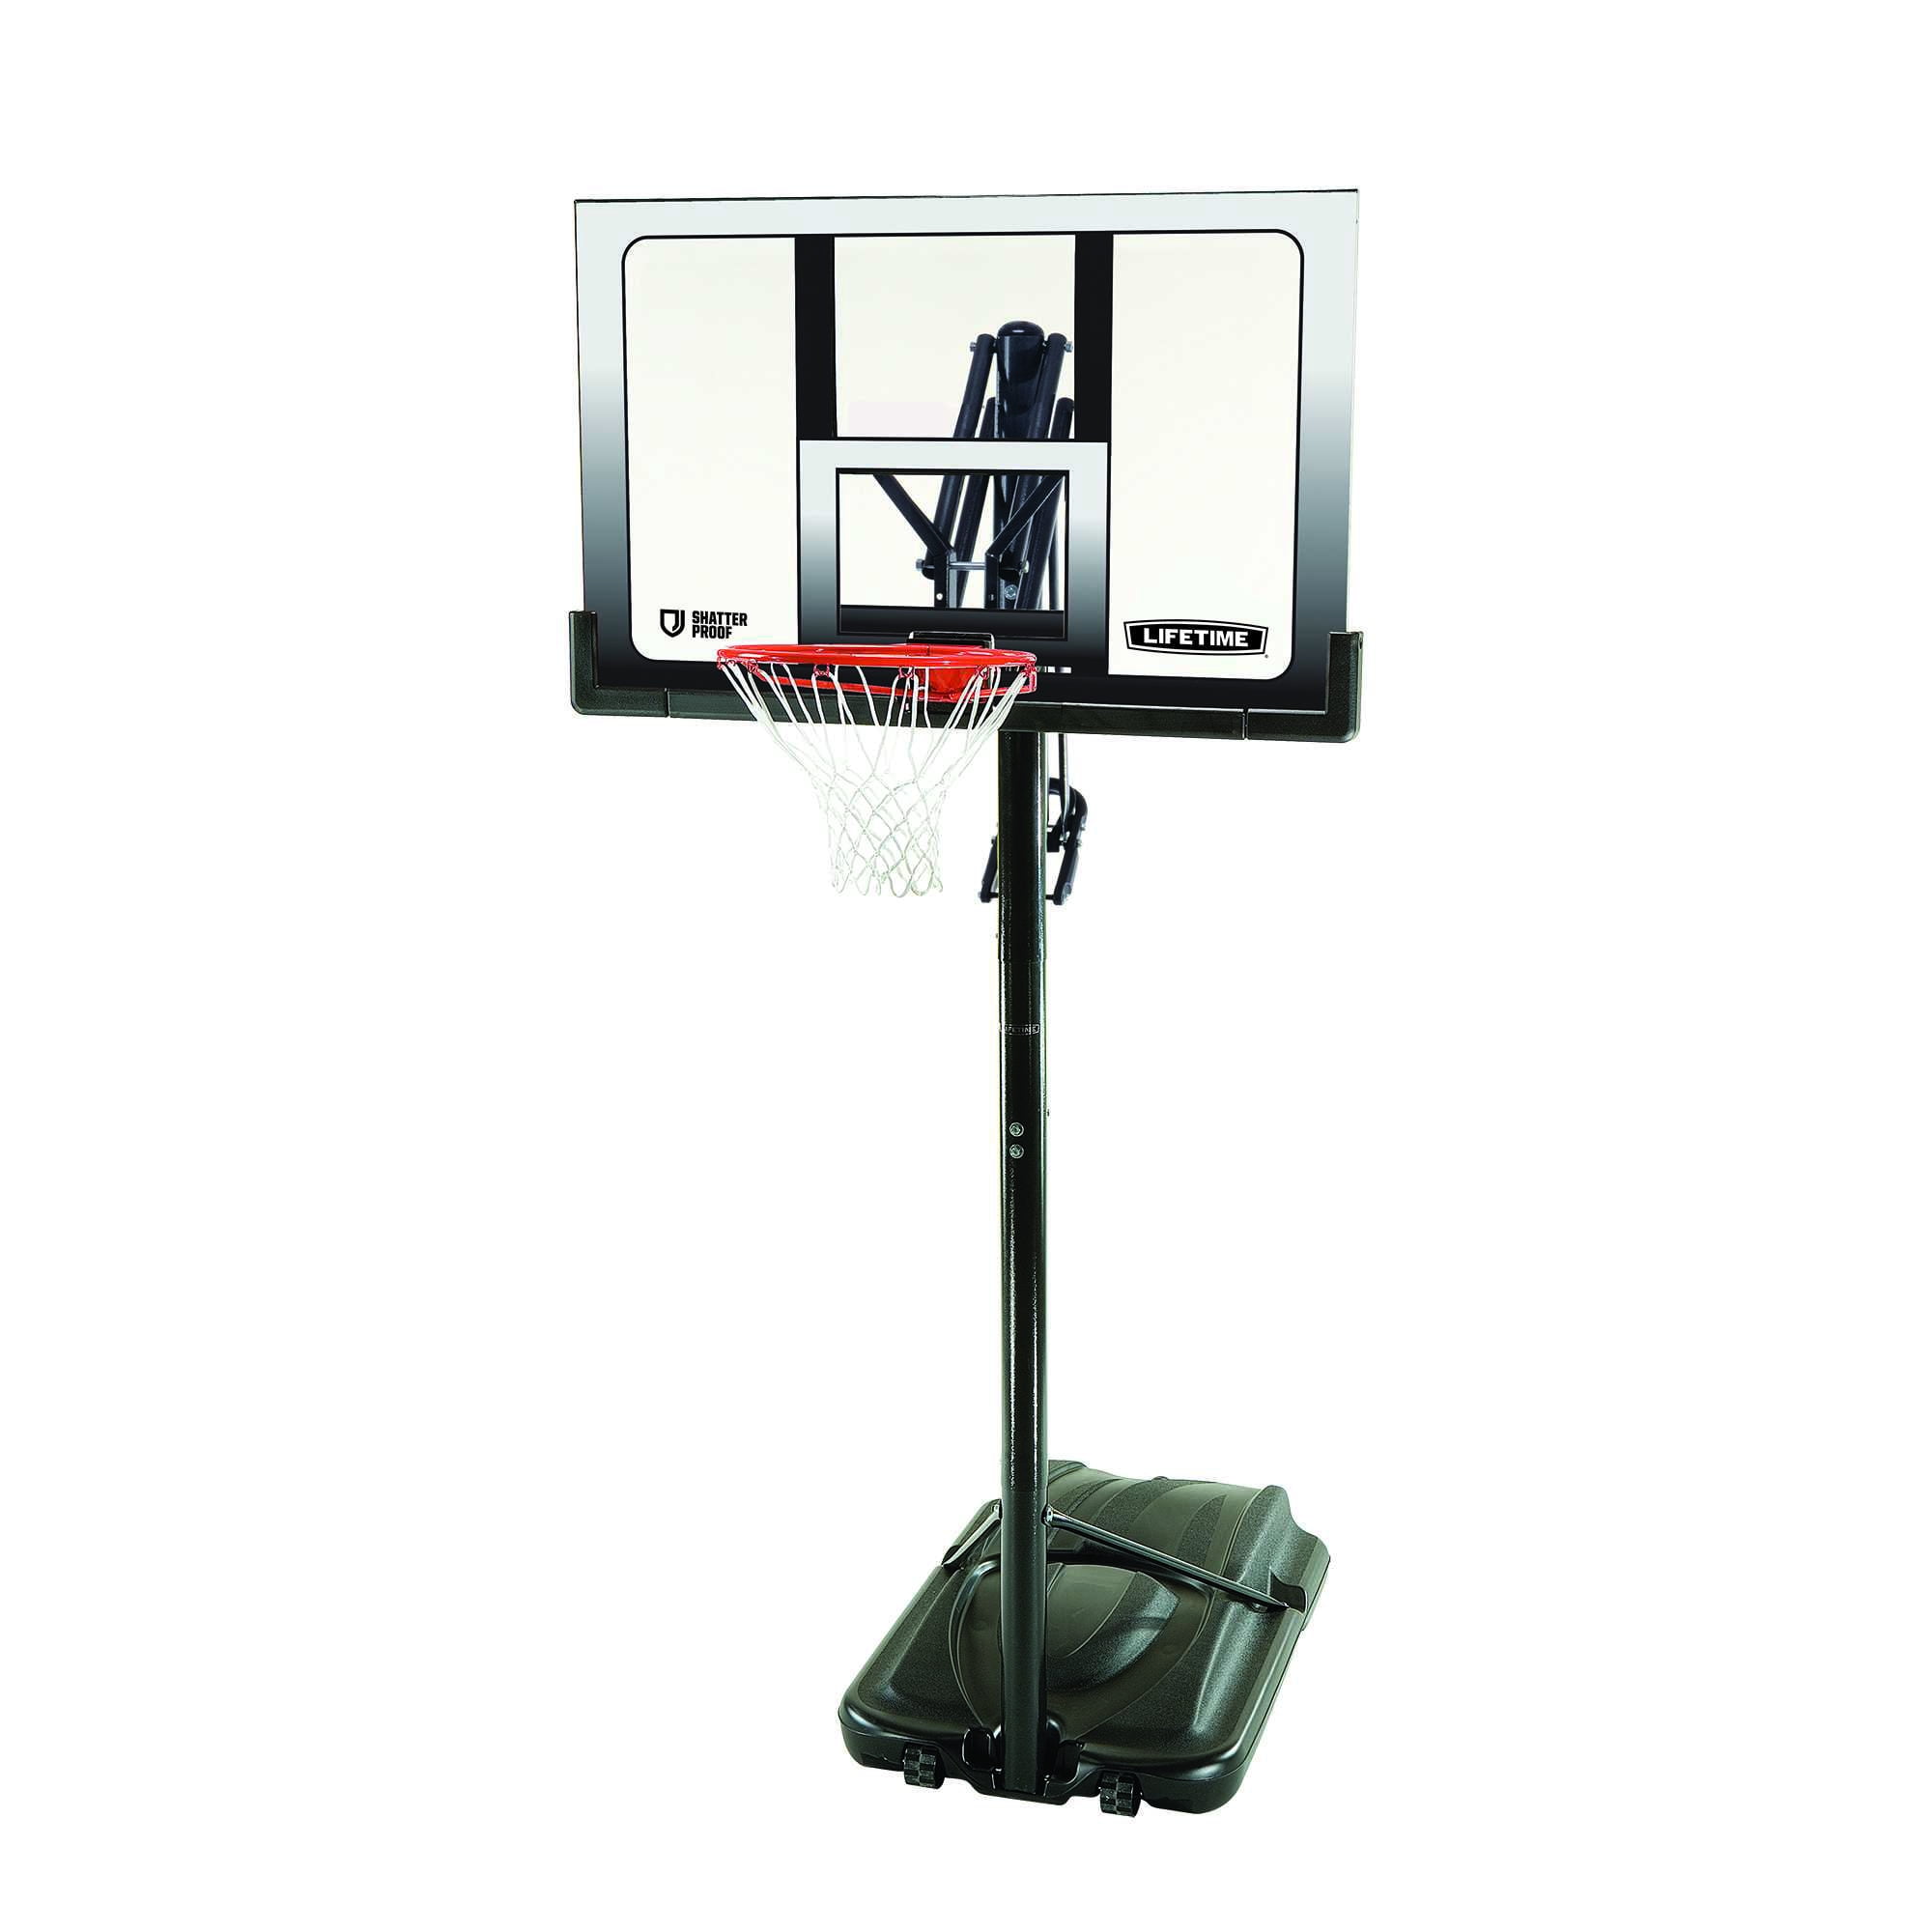 reebok basketball hoop instruction manual